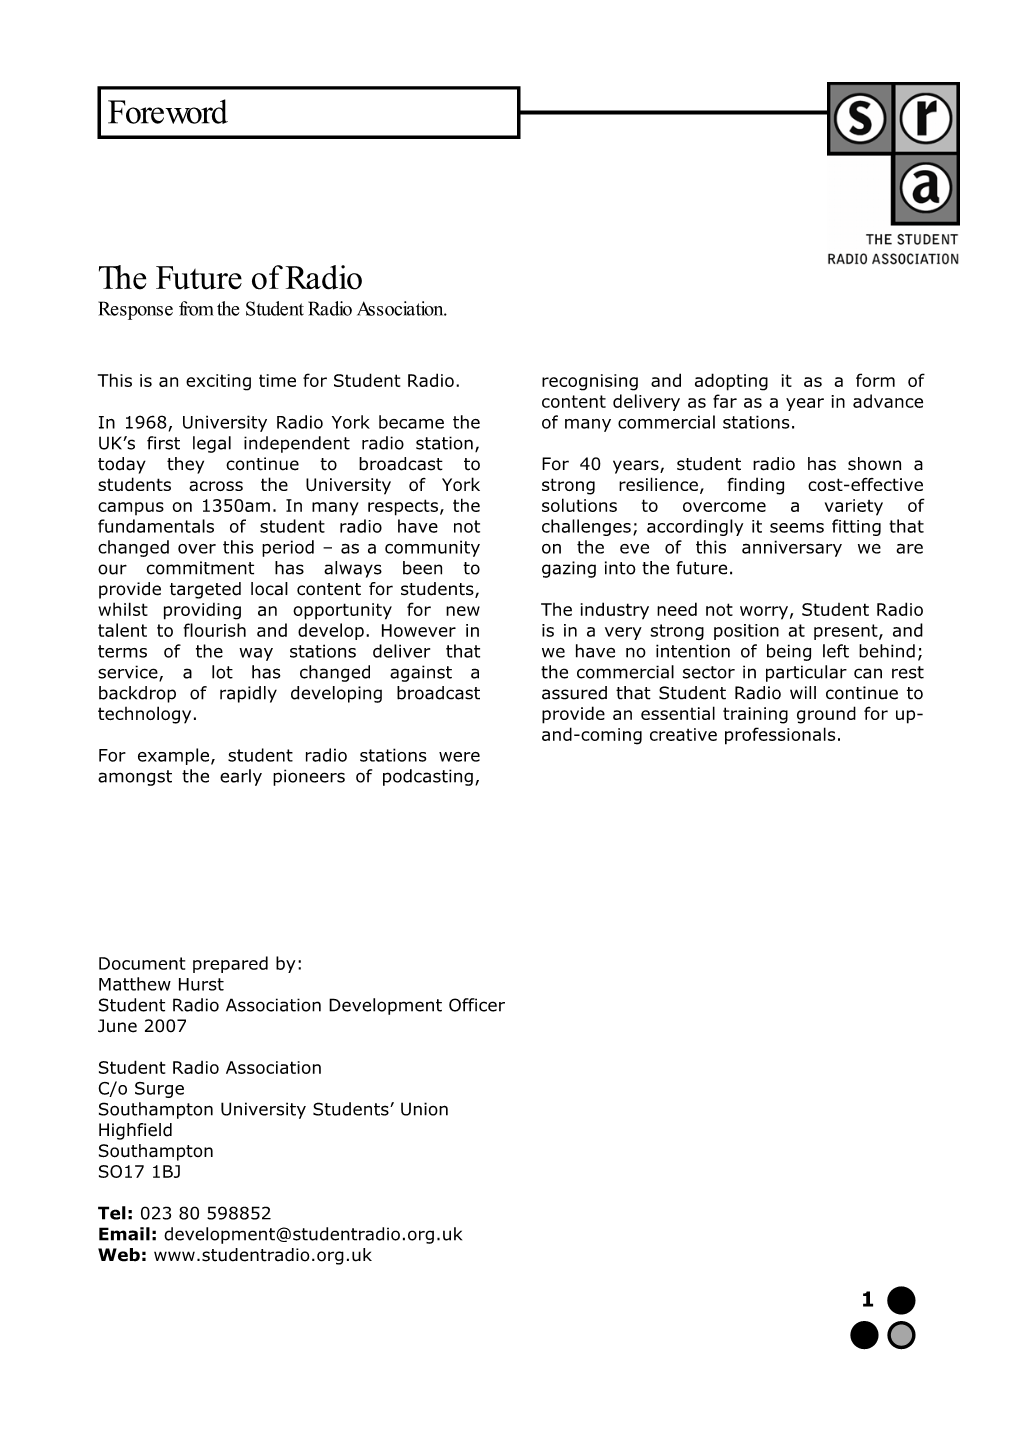 The Future of Radio Foreword